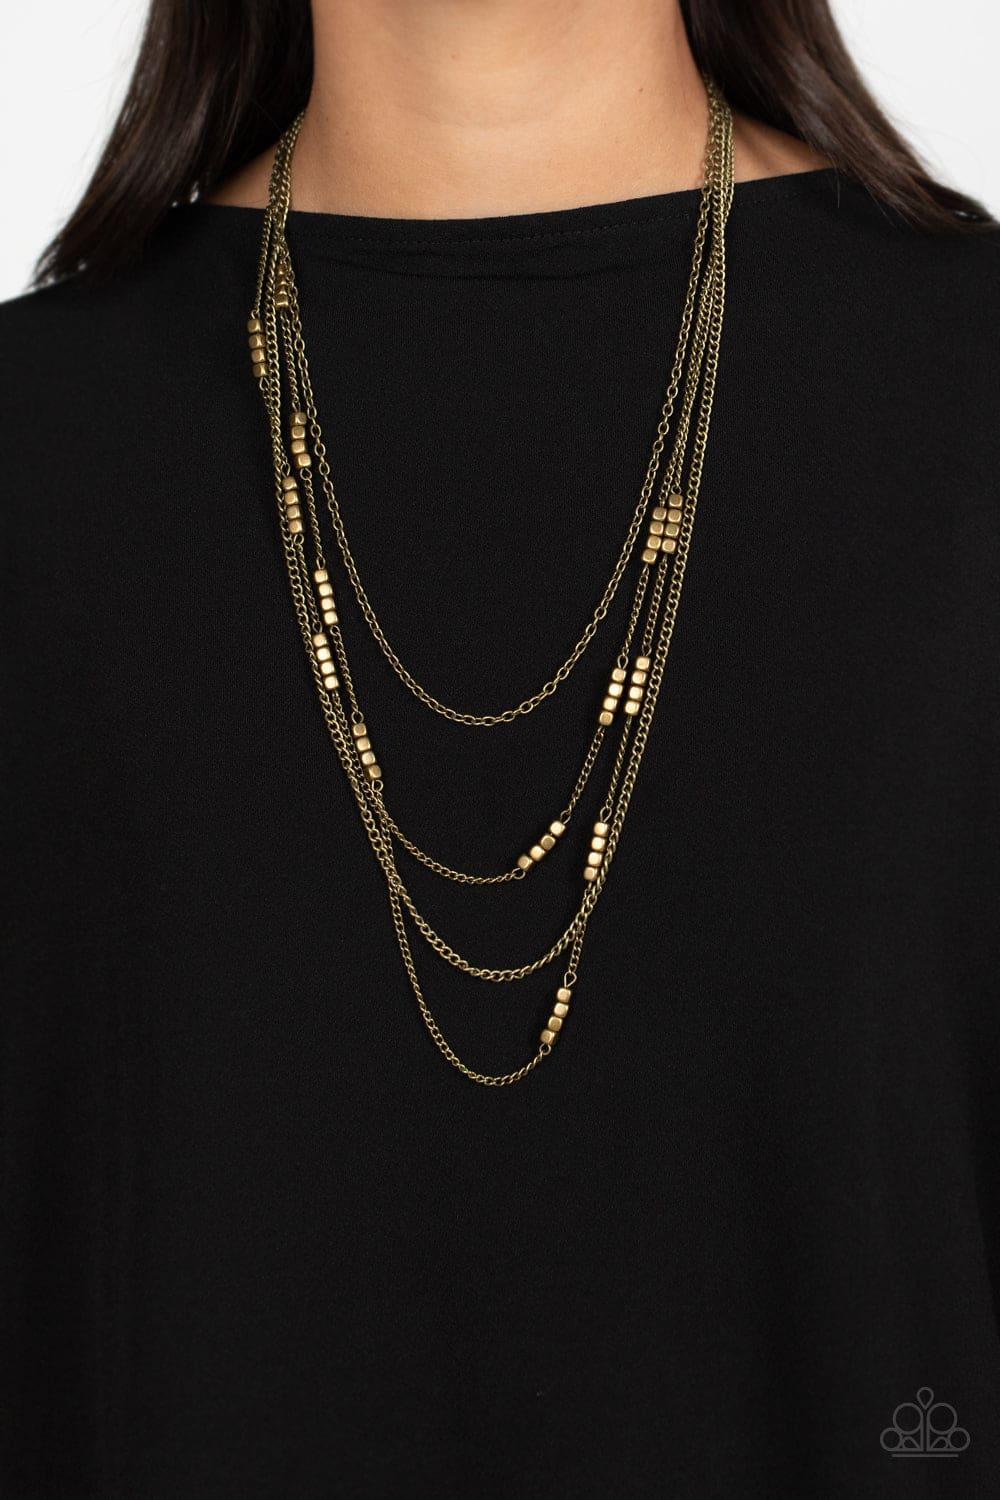 Paparazzi Accessories - Metallic Monarch - Brass Necklace - Bling by JessieK